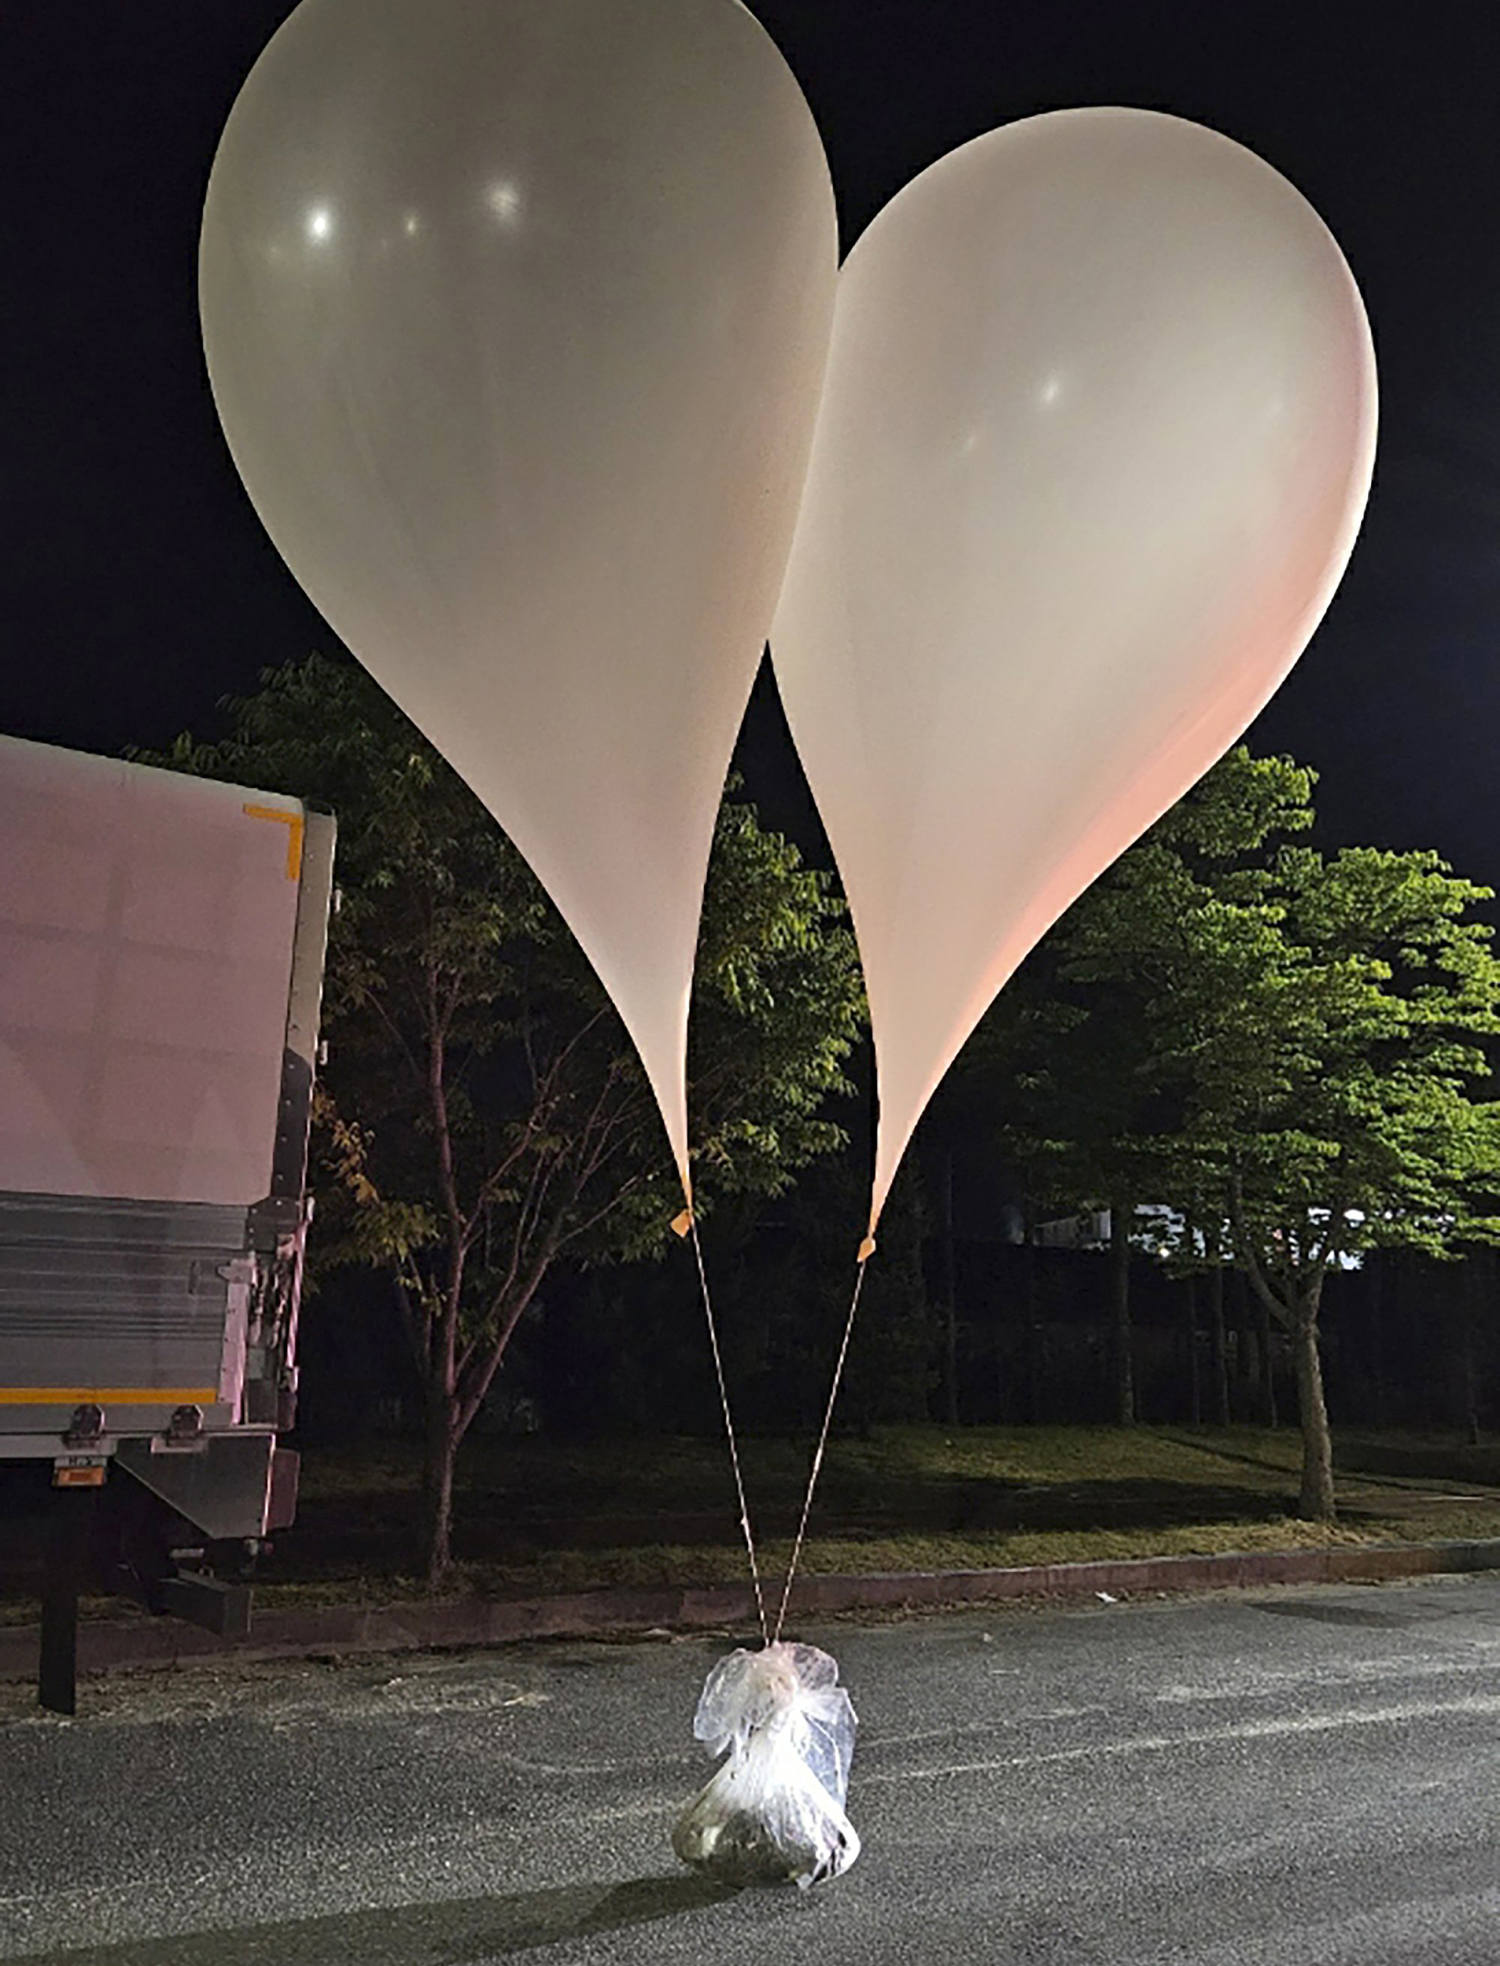 South Korea slams North Korea’s fresh trash balloon launches and threatens loudspeaker broadcasts